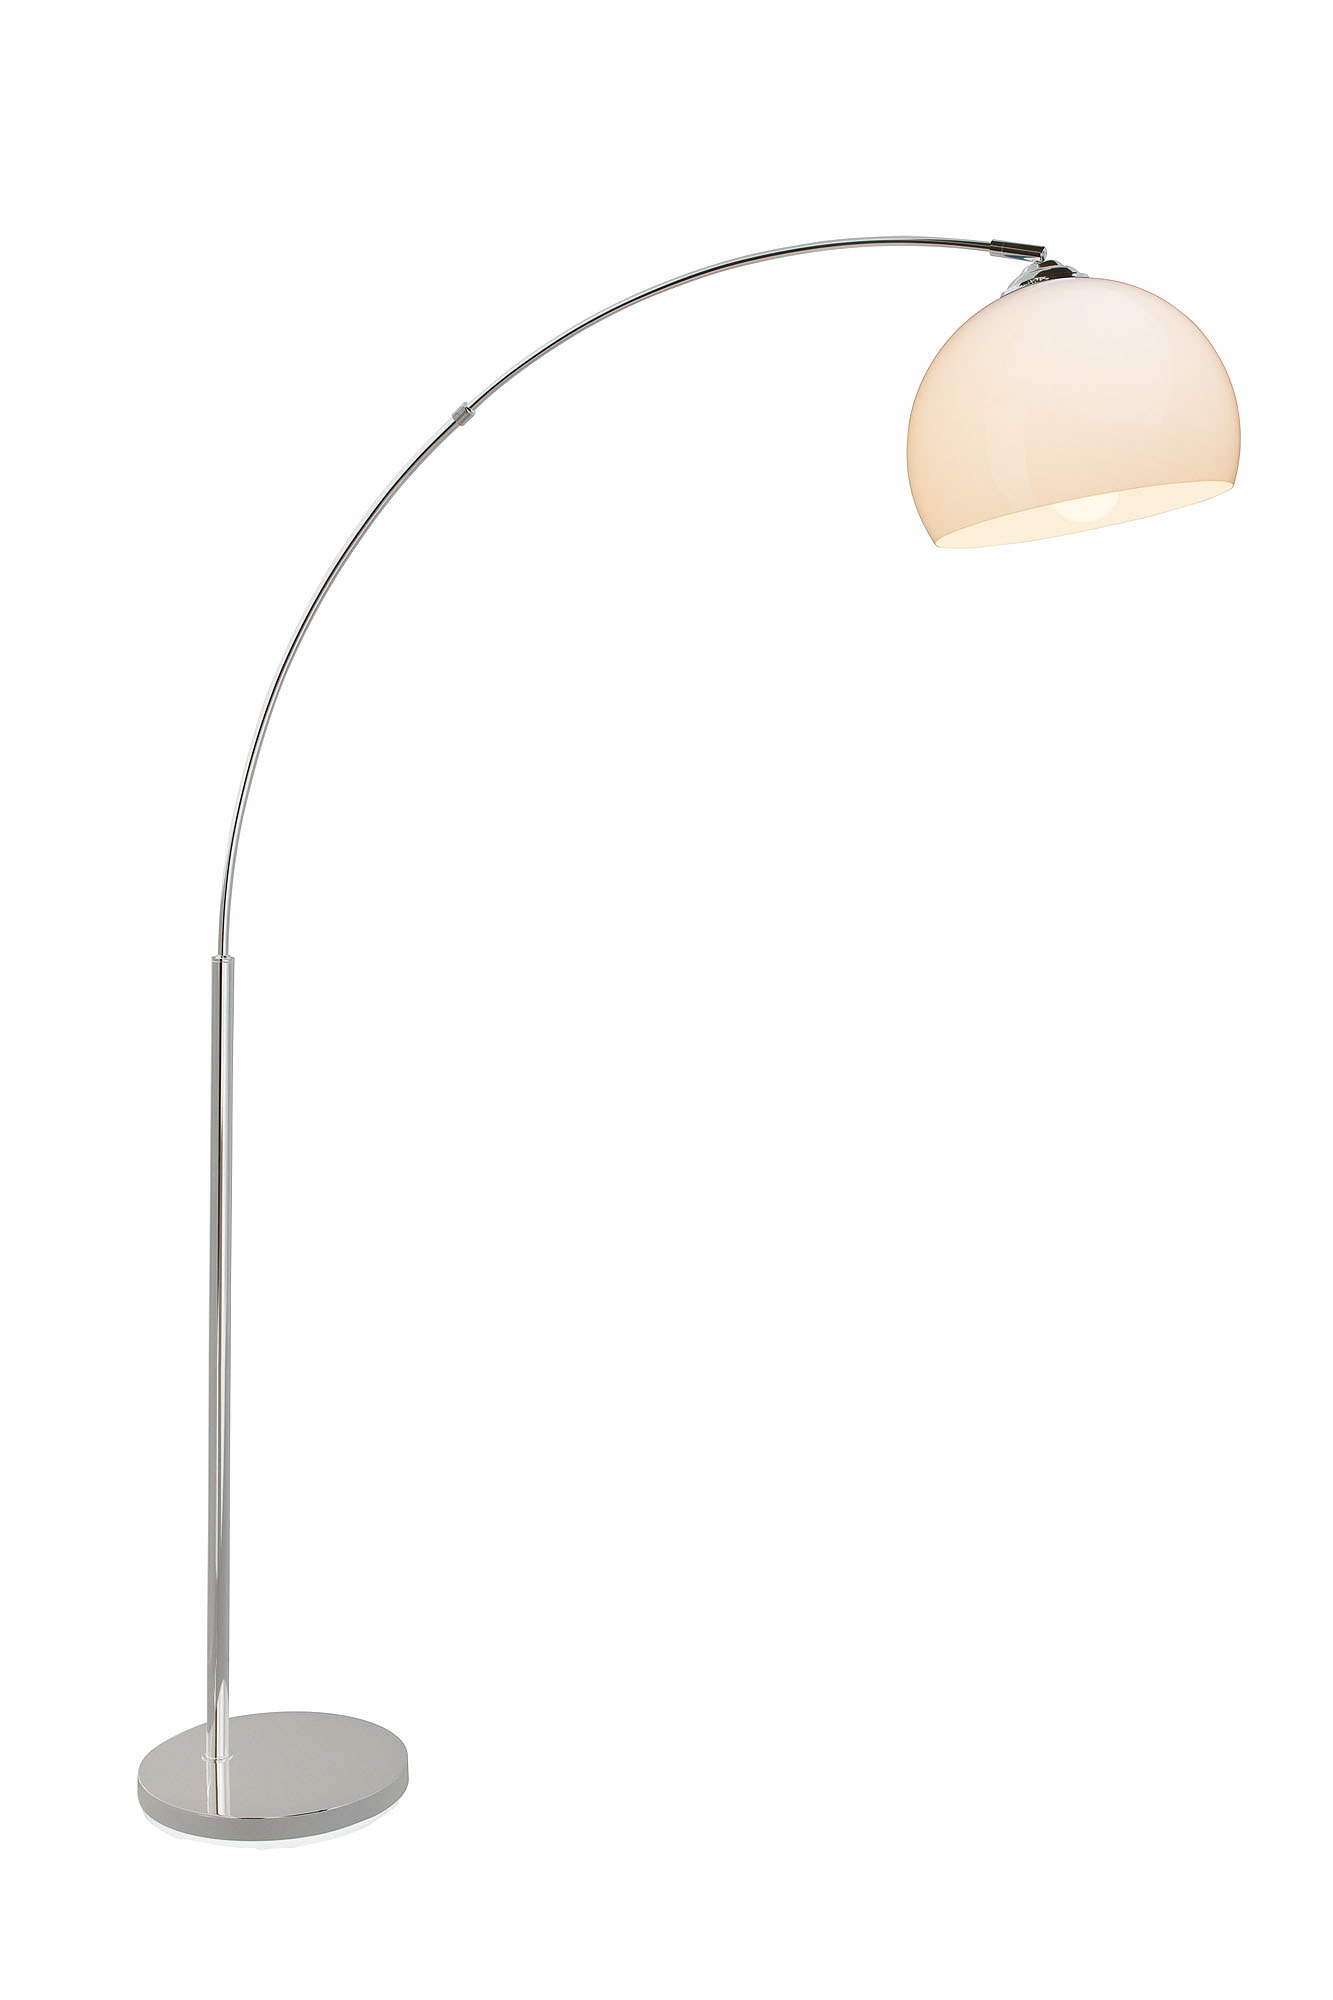 Brilliant Bogenlampe »Vessa«, 1 flammig-flammig, 166 cm Höhe, 122 cm Ausladung, E27, Metall/Kunststoff, chrom/weiß